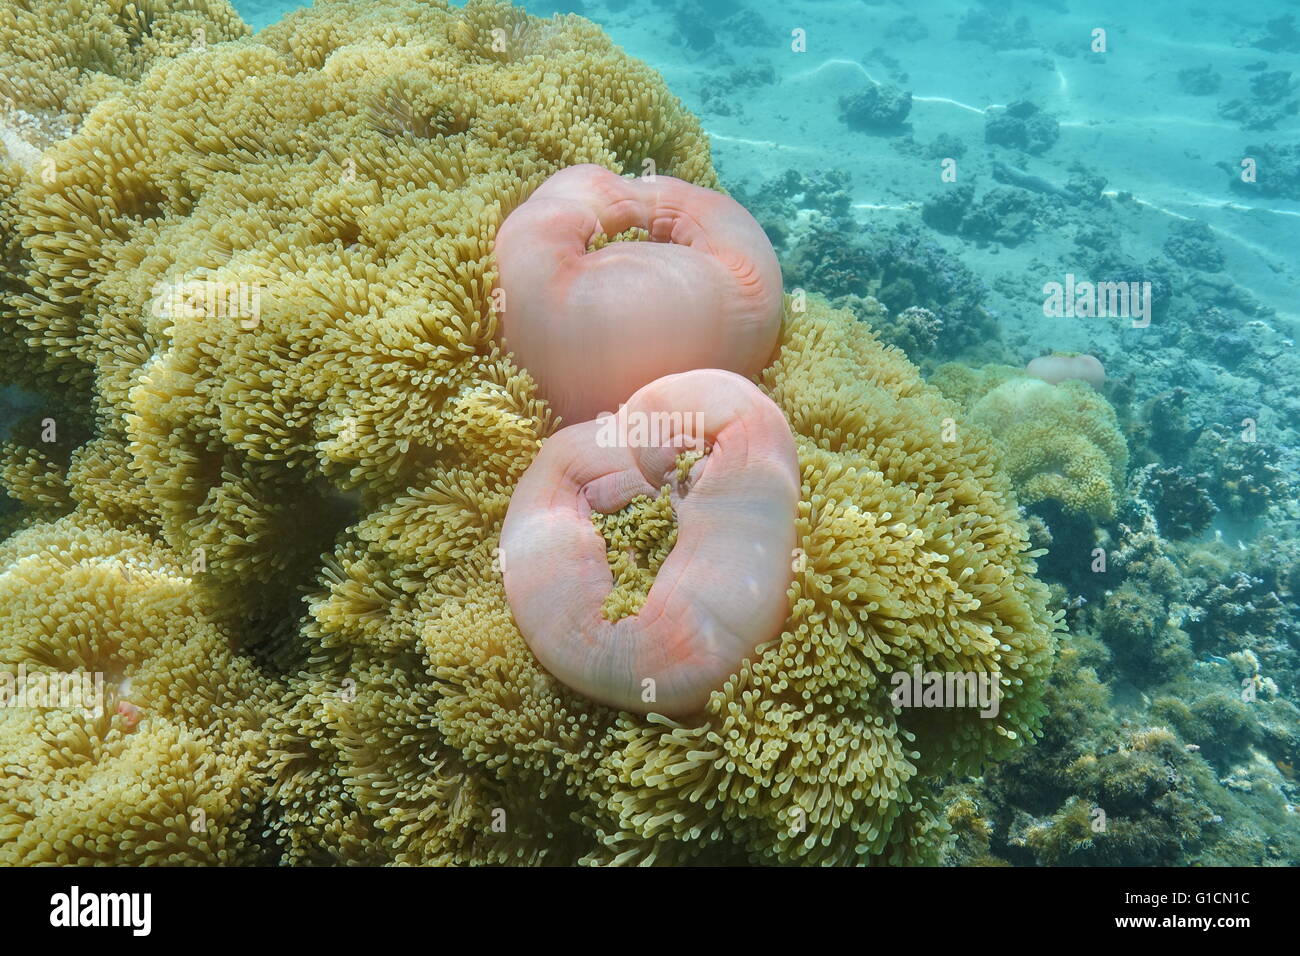 Magnificent sea anemones, Heteractis magnifica, underwater life, Pacific ocean, French Polynesia Stock Photo